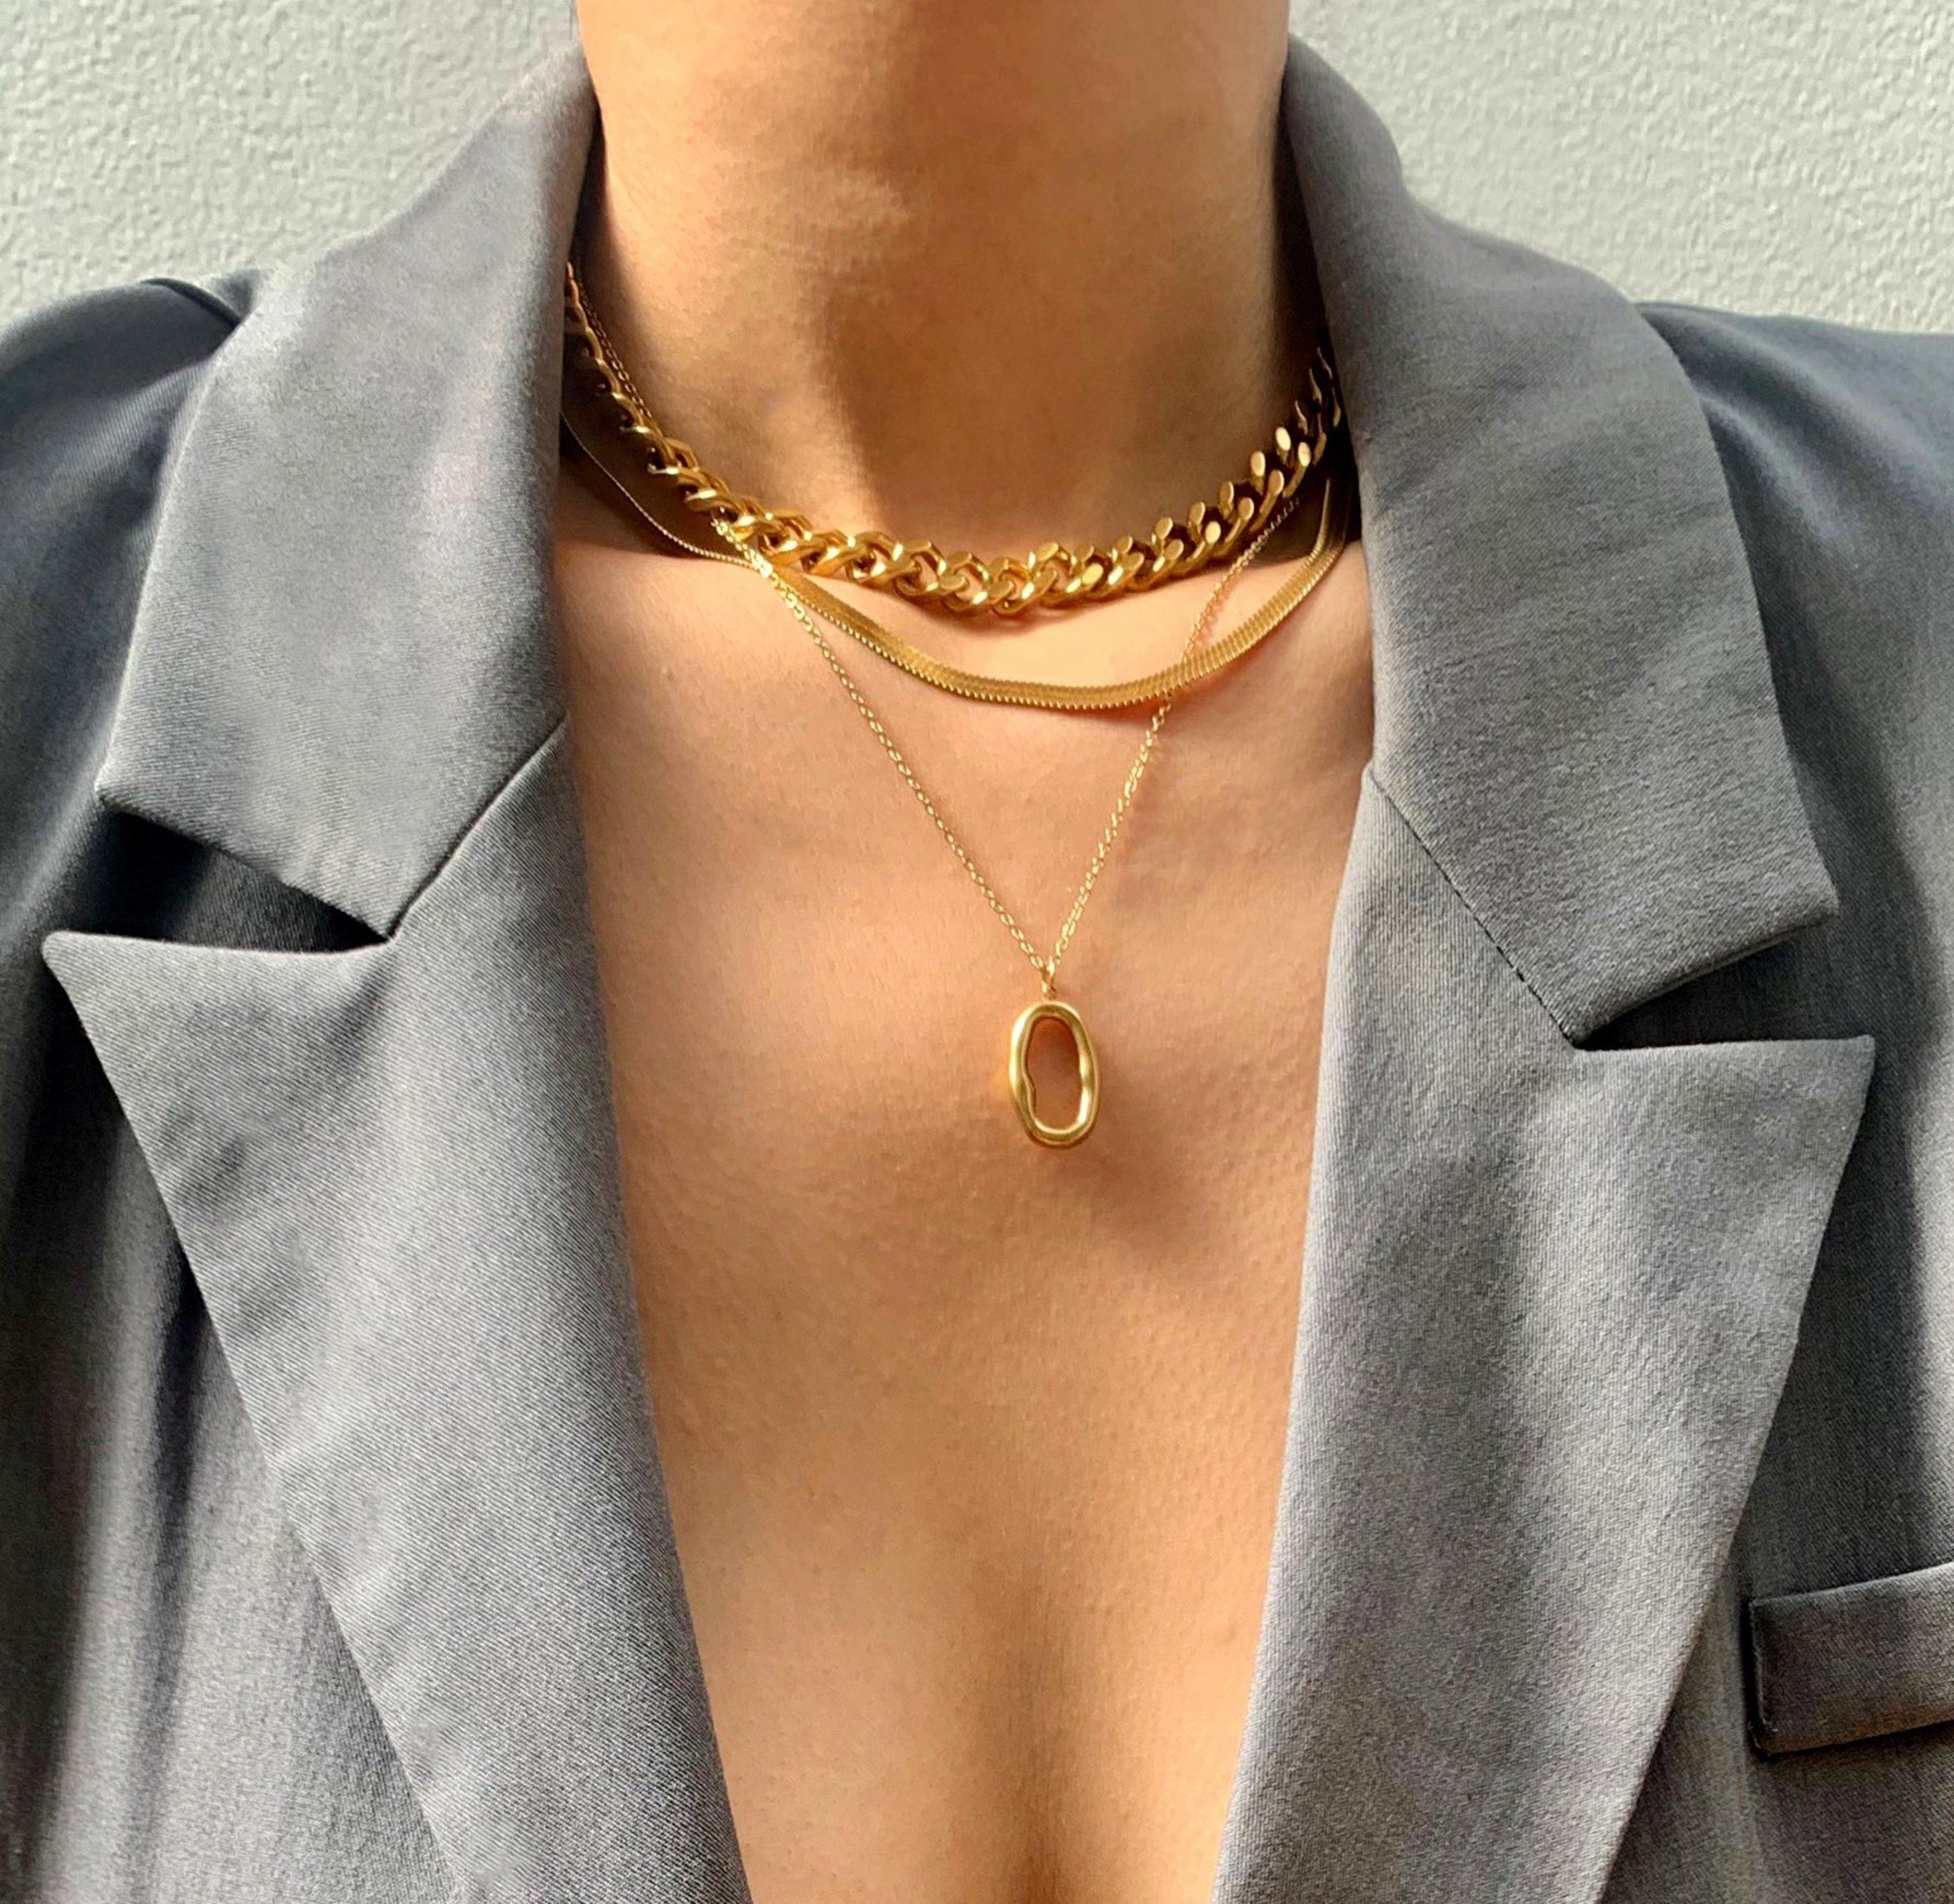 gold o pendant necklace